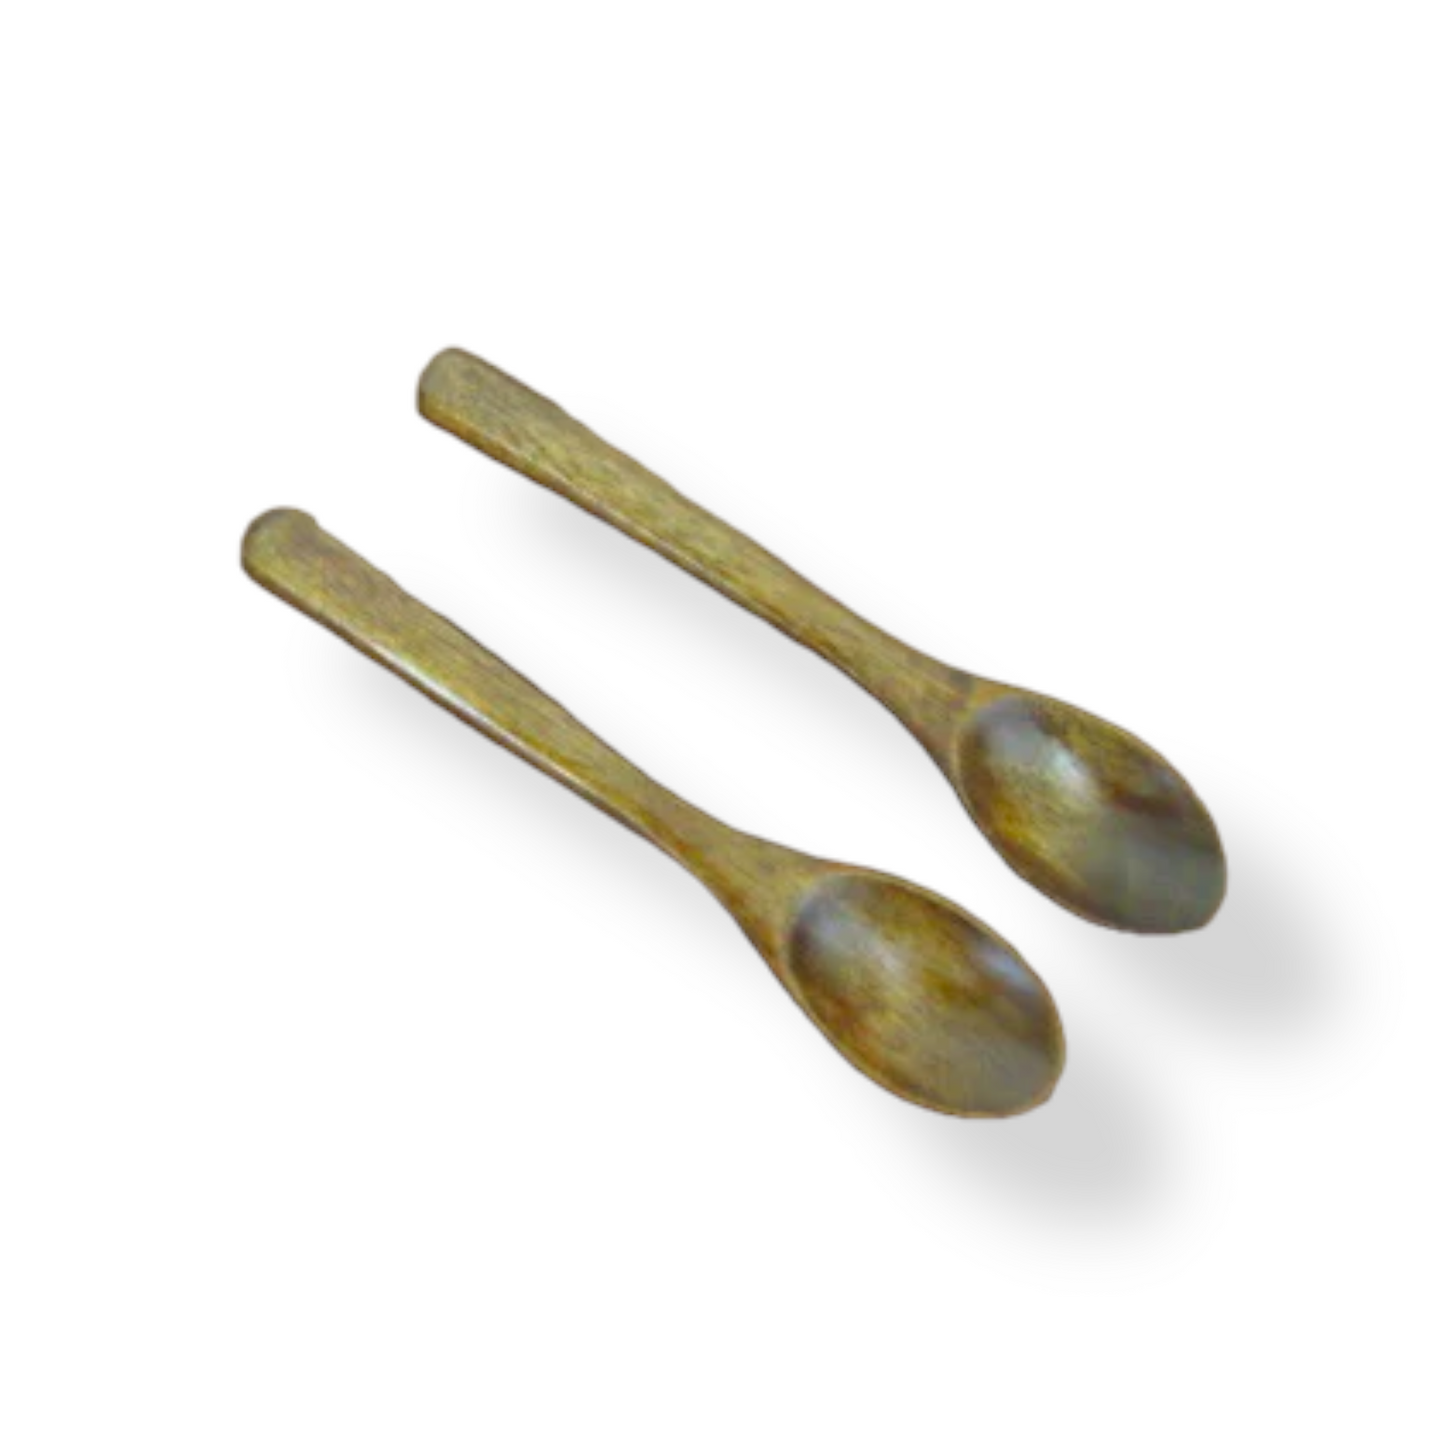 Set of 2 small wooden Spoons for salt sugar or spices - Lunaz Shop